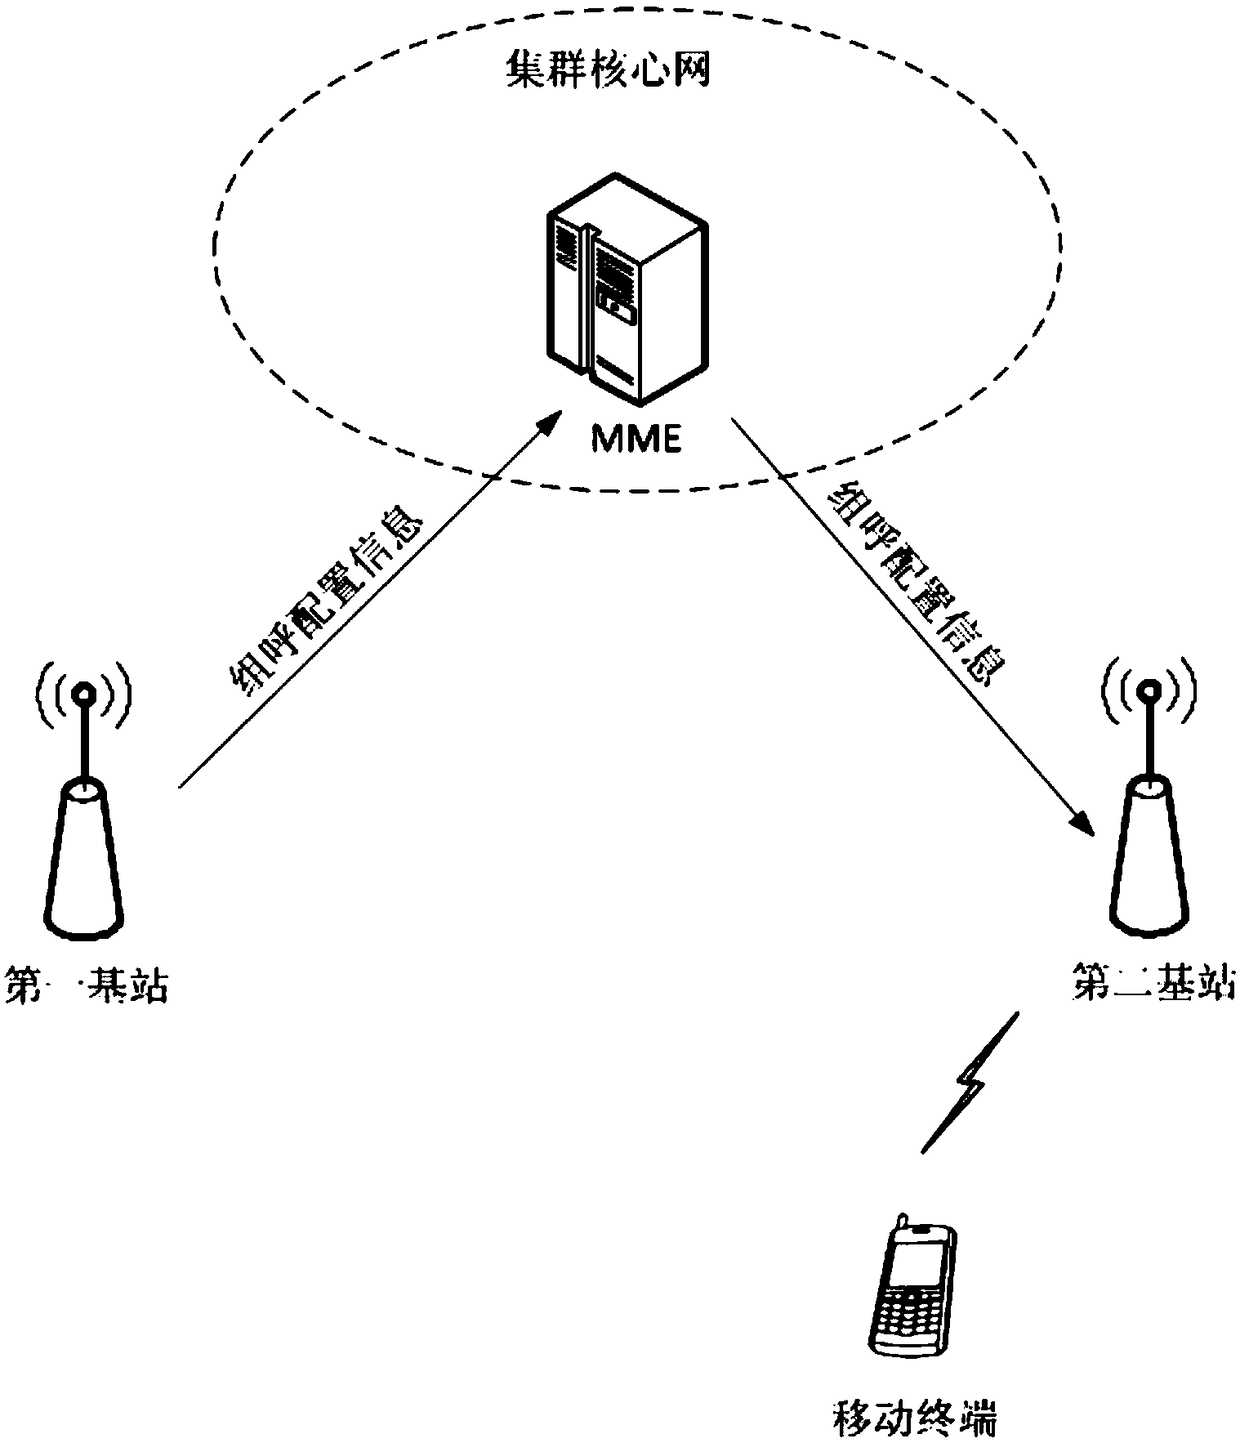 Method for transmitting group call configuration information, MME, and system for transmitting group call configuration information